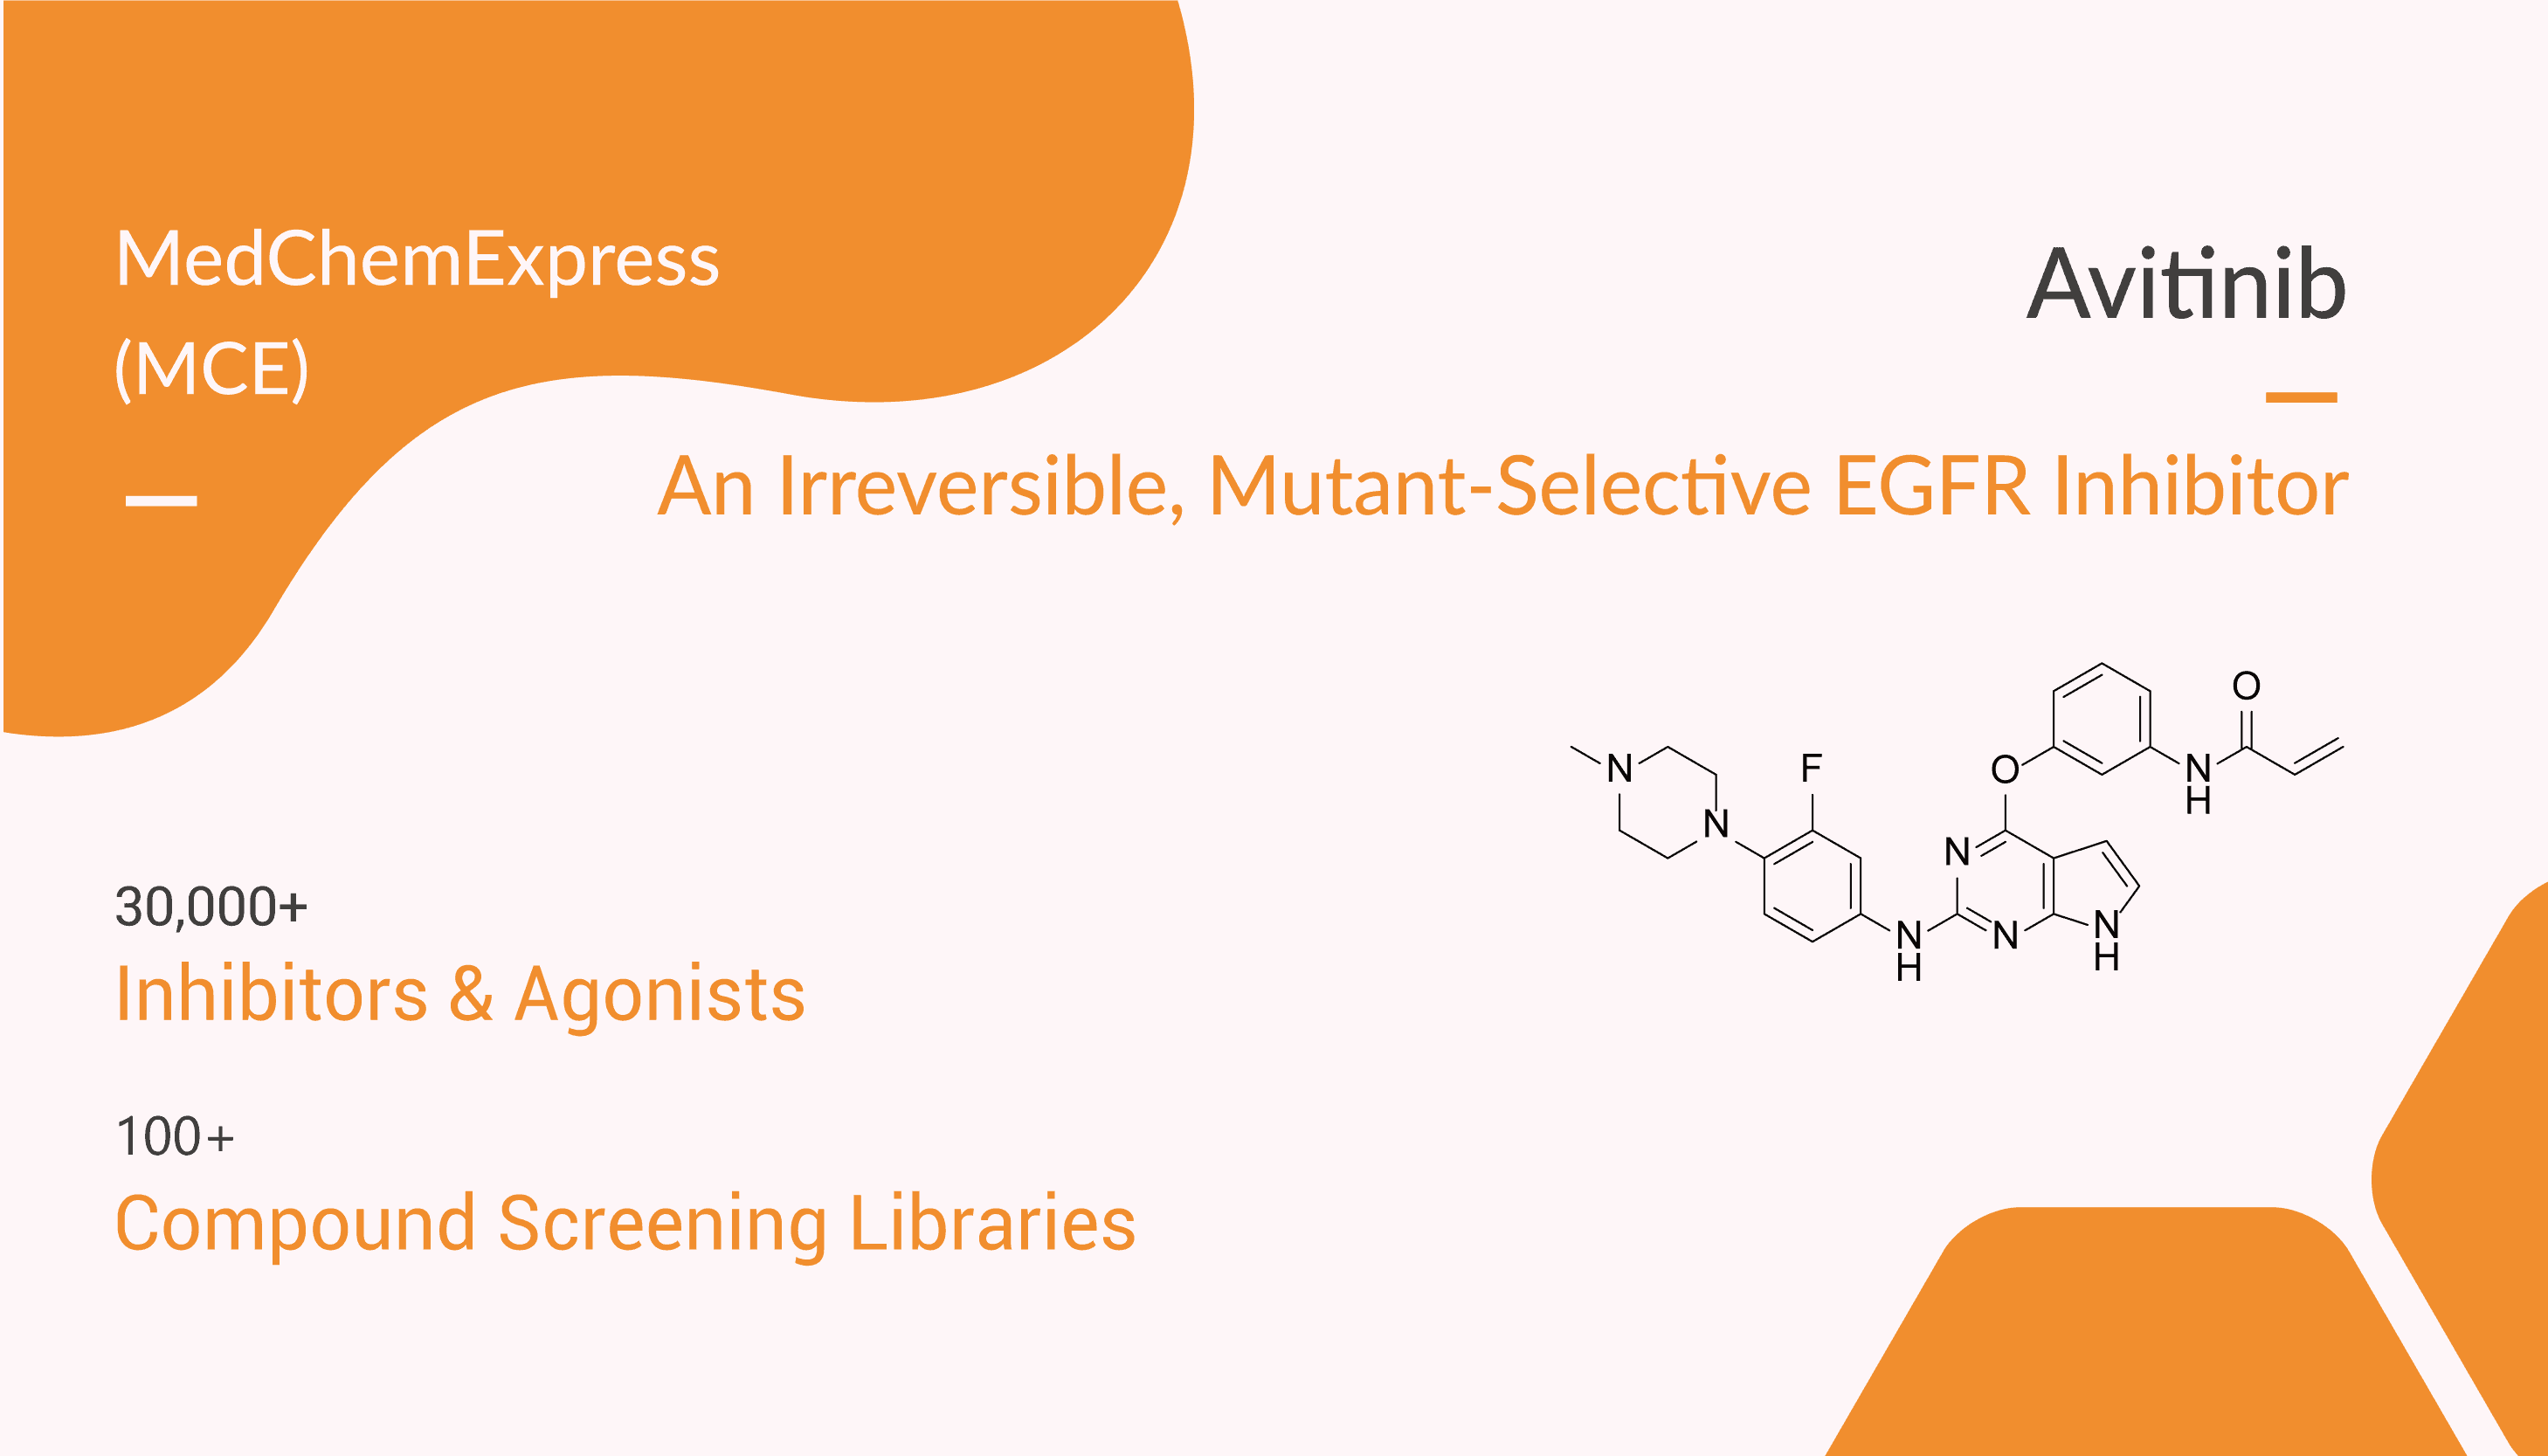 Avitinib 02 - Avitinib is an Irreversible, Mutant-Selective EGFR Inhibitor